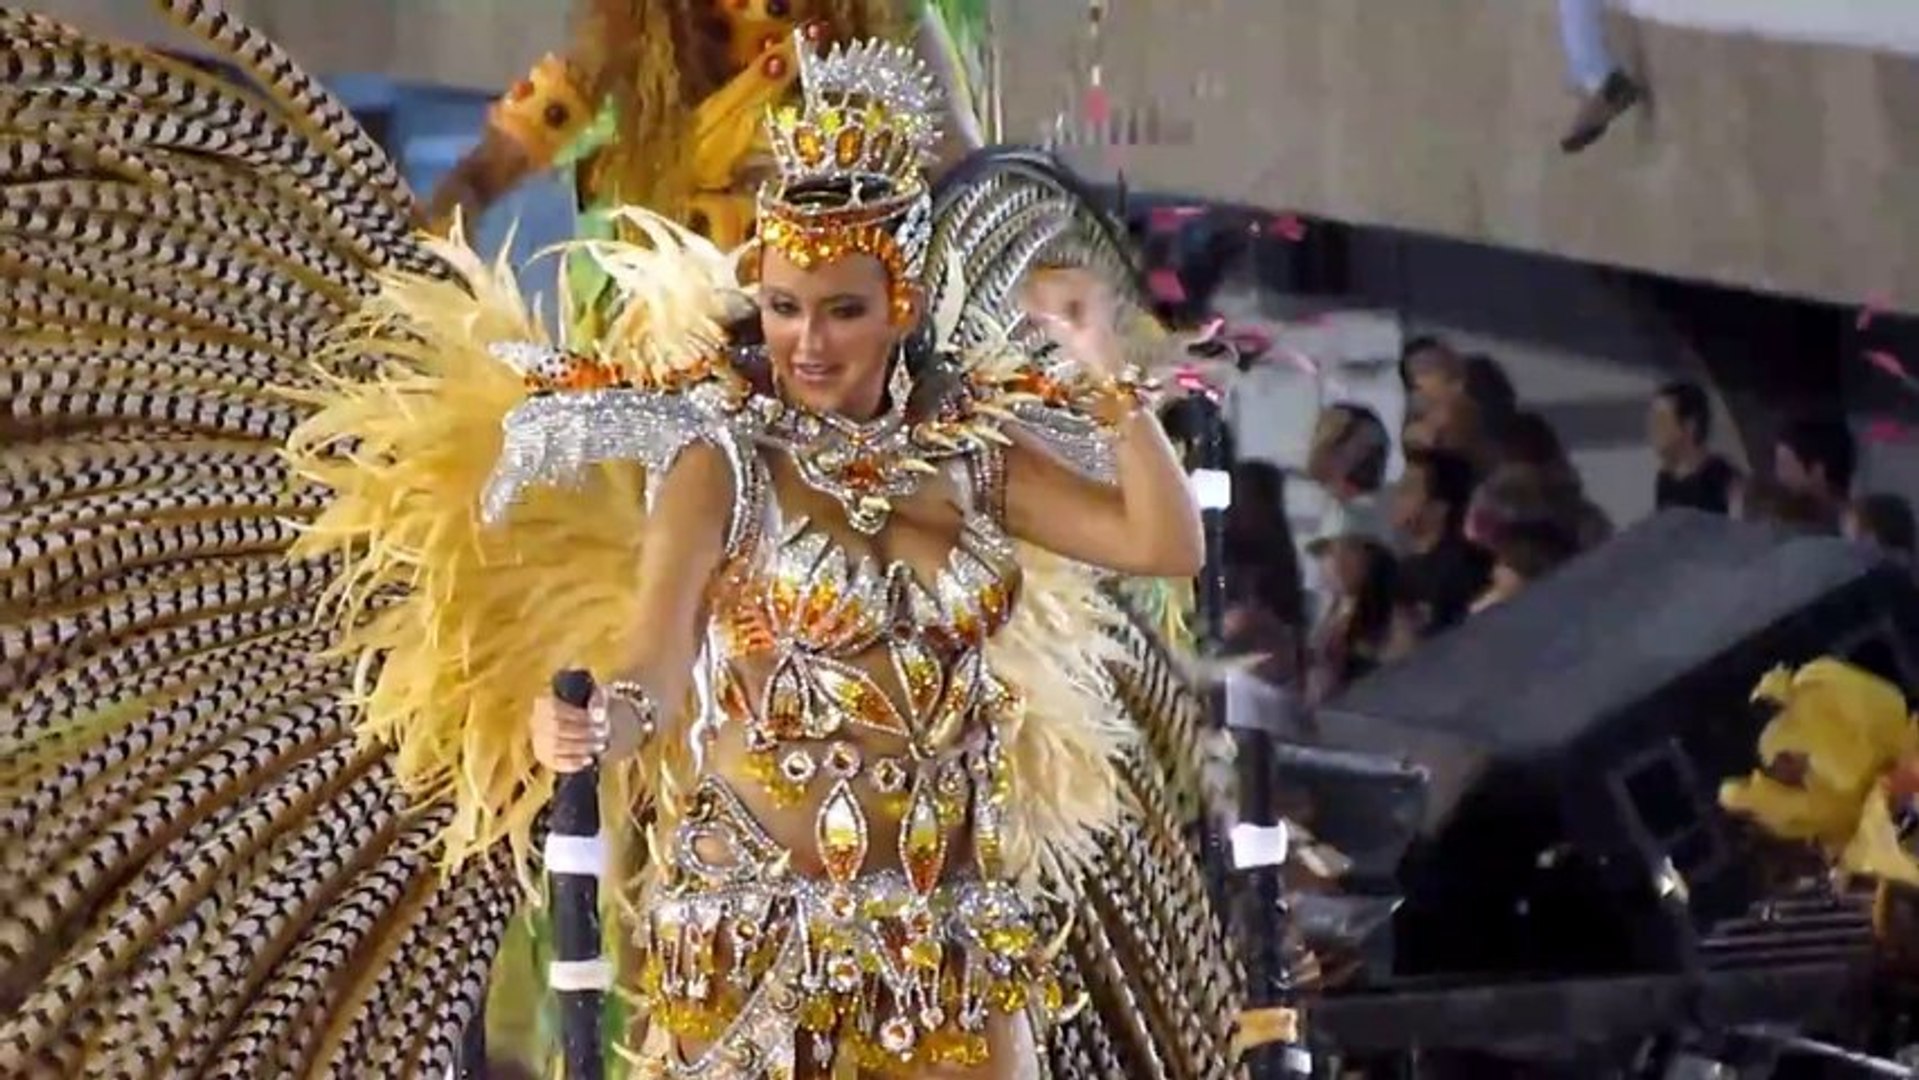 Carnevale di Rio - Video Dailymotion